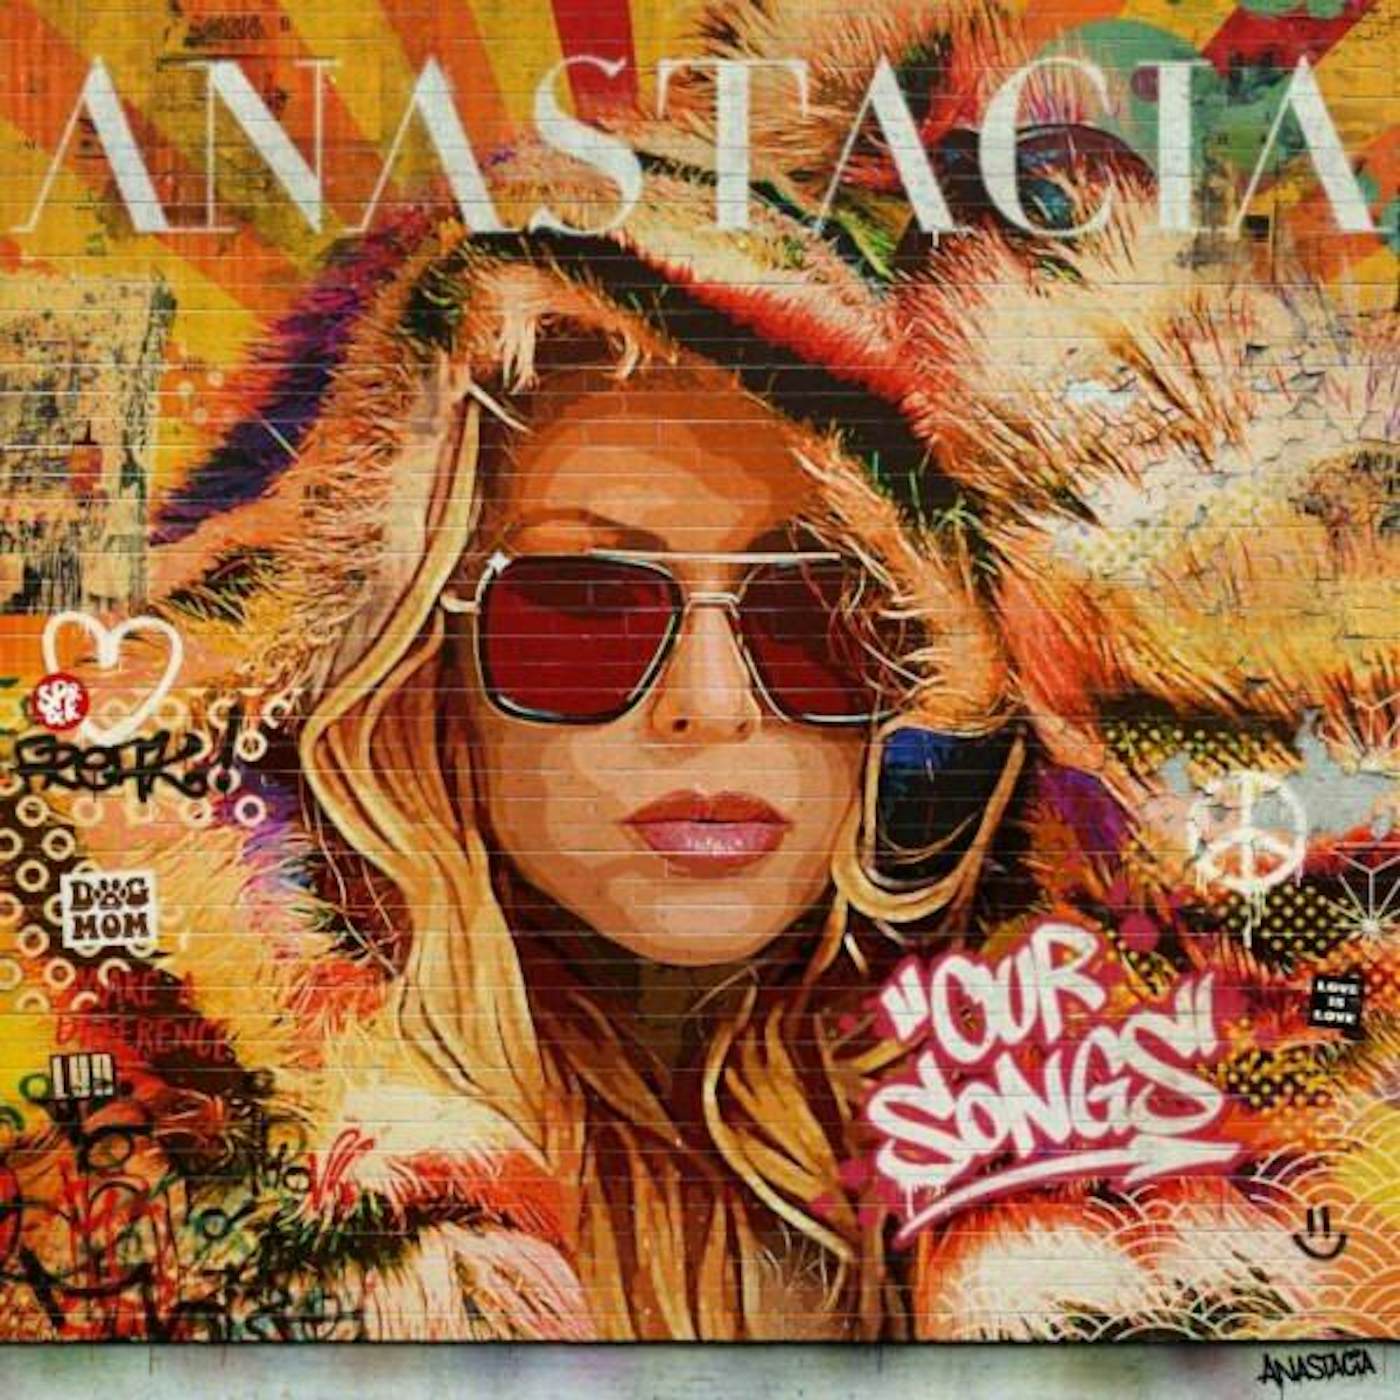 Anastacia OUR SONGS CD